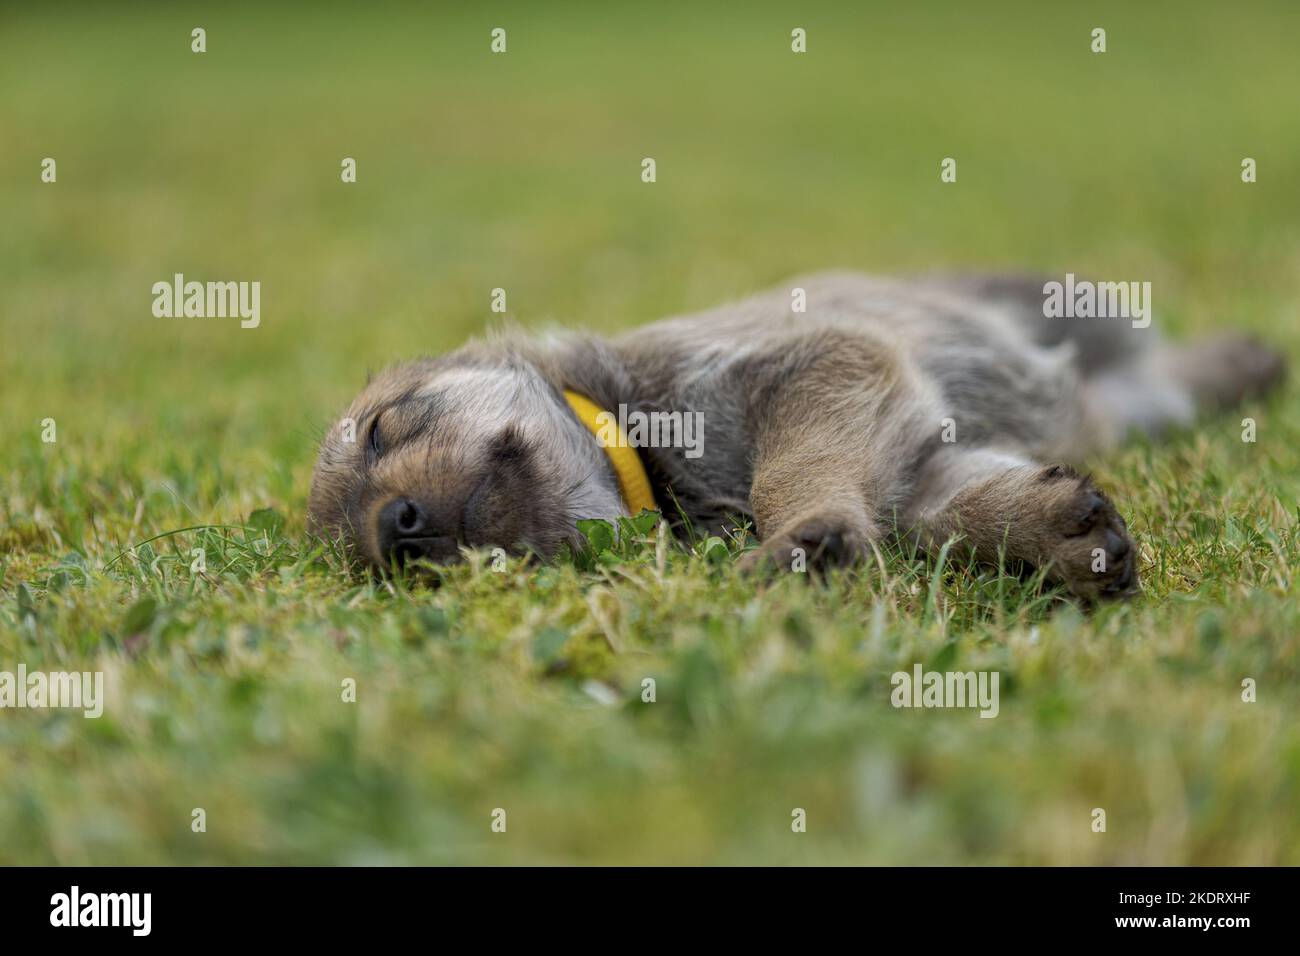 sleeping Berger Picard Dog Puppy Stock Photo